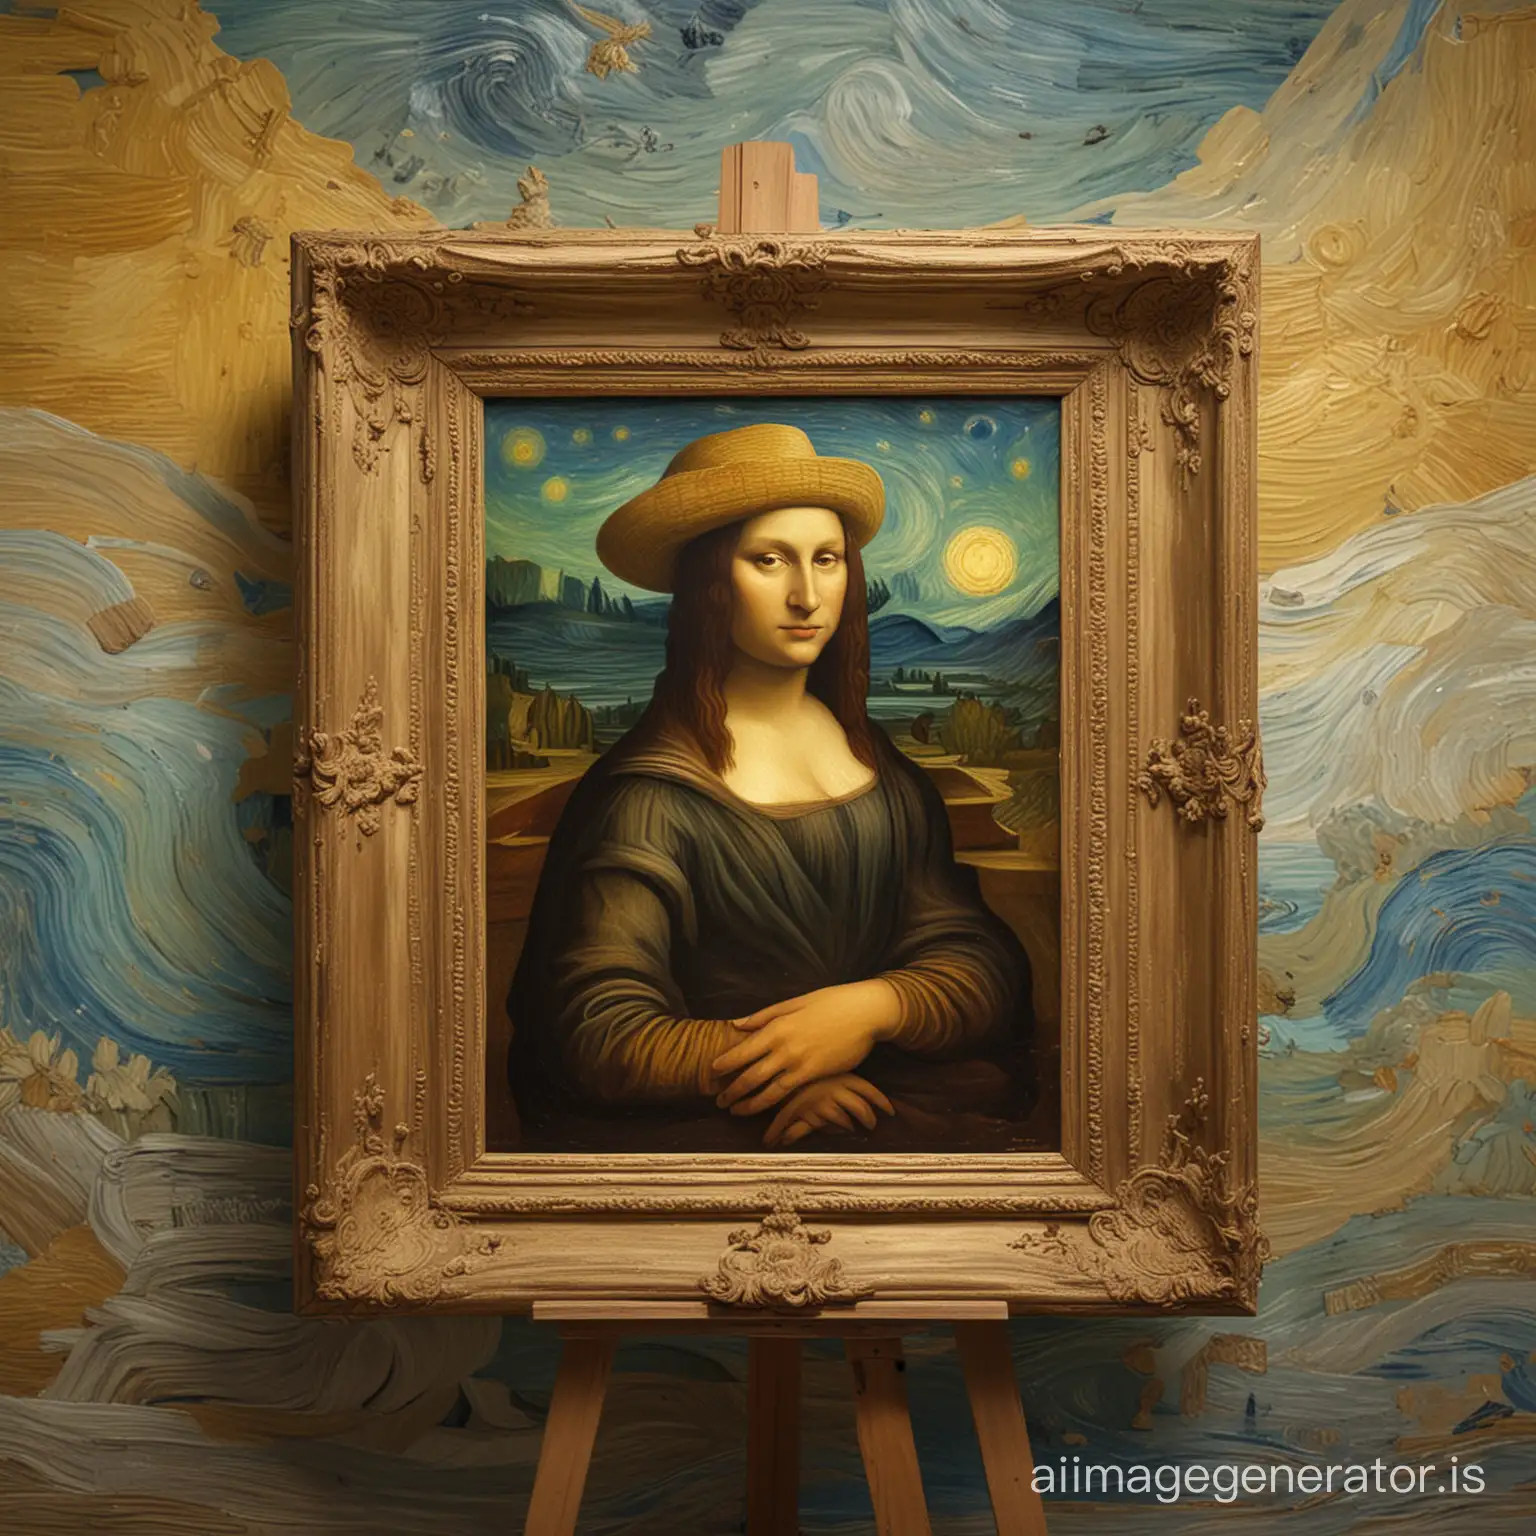 Surreal-Scene-Mona-Lisa-Painting-Vincent-van-Gogh-Portrait